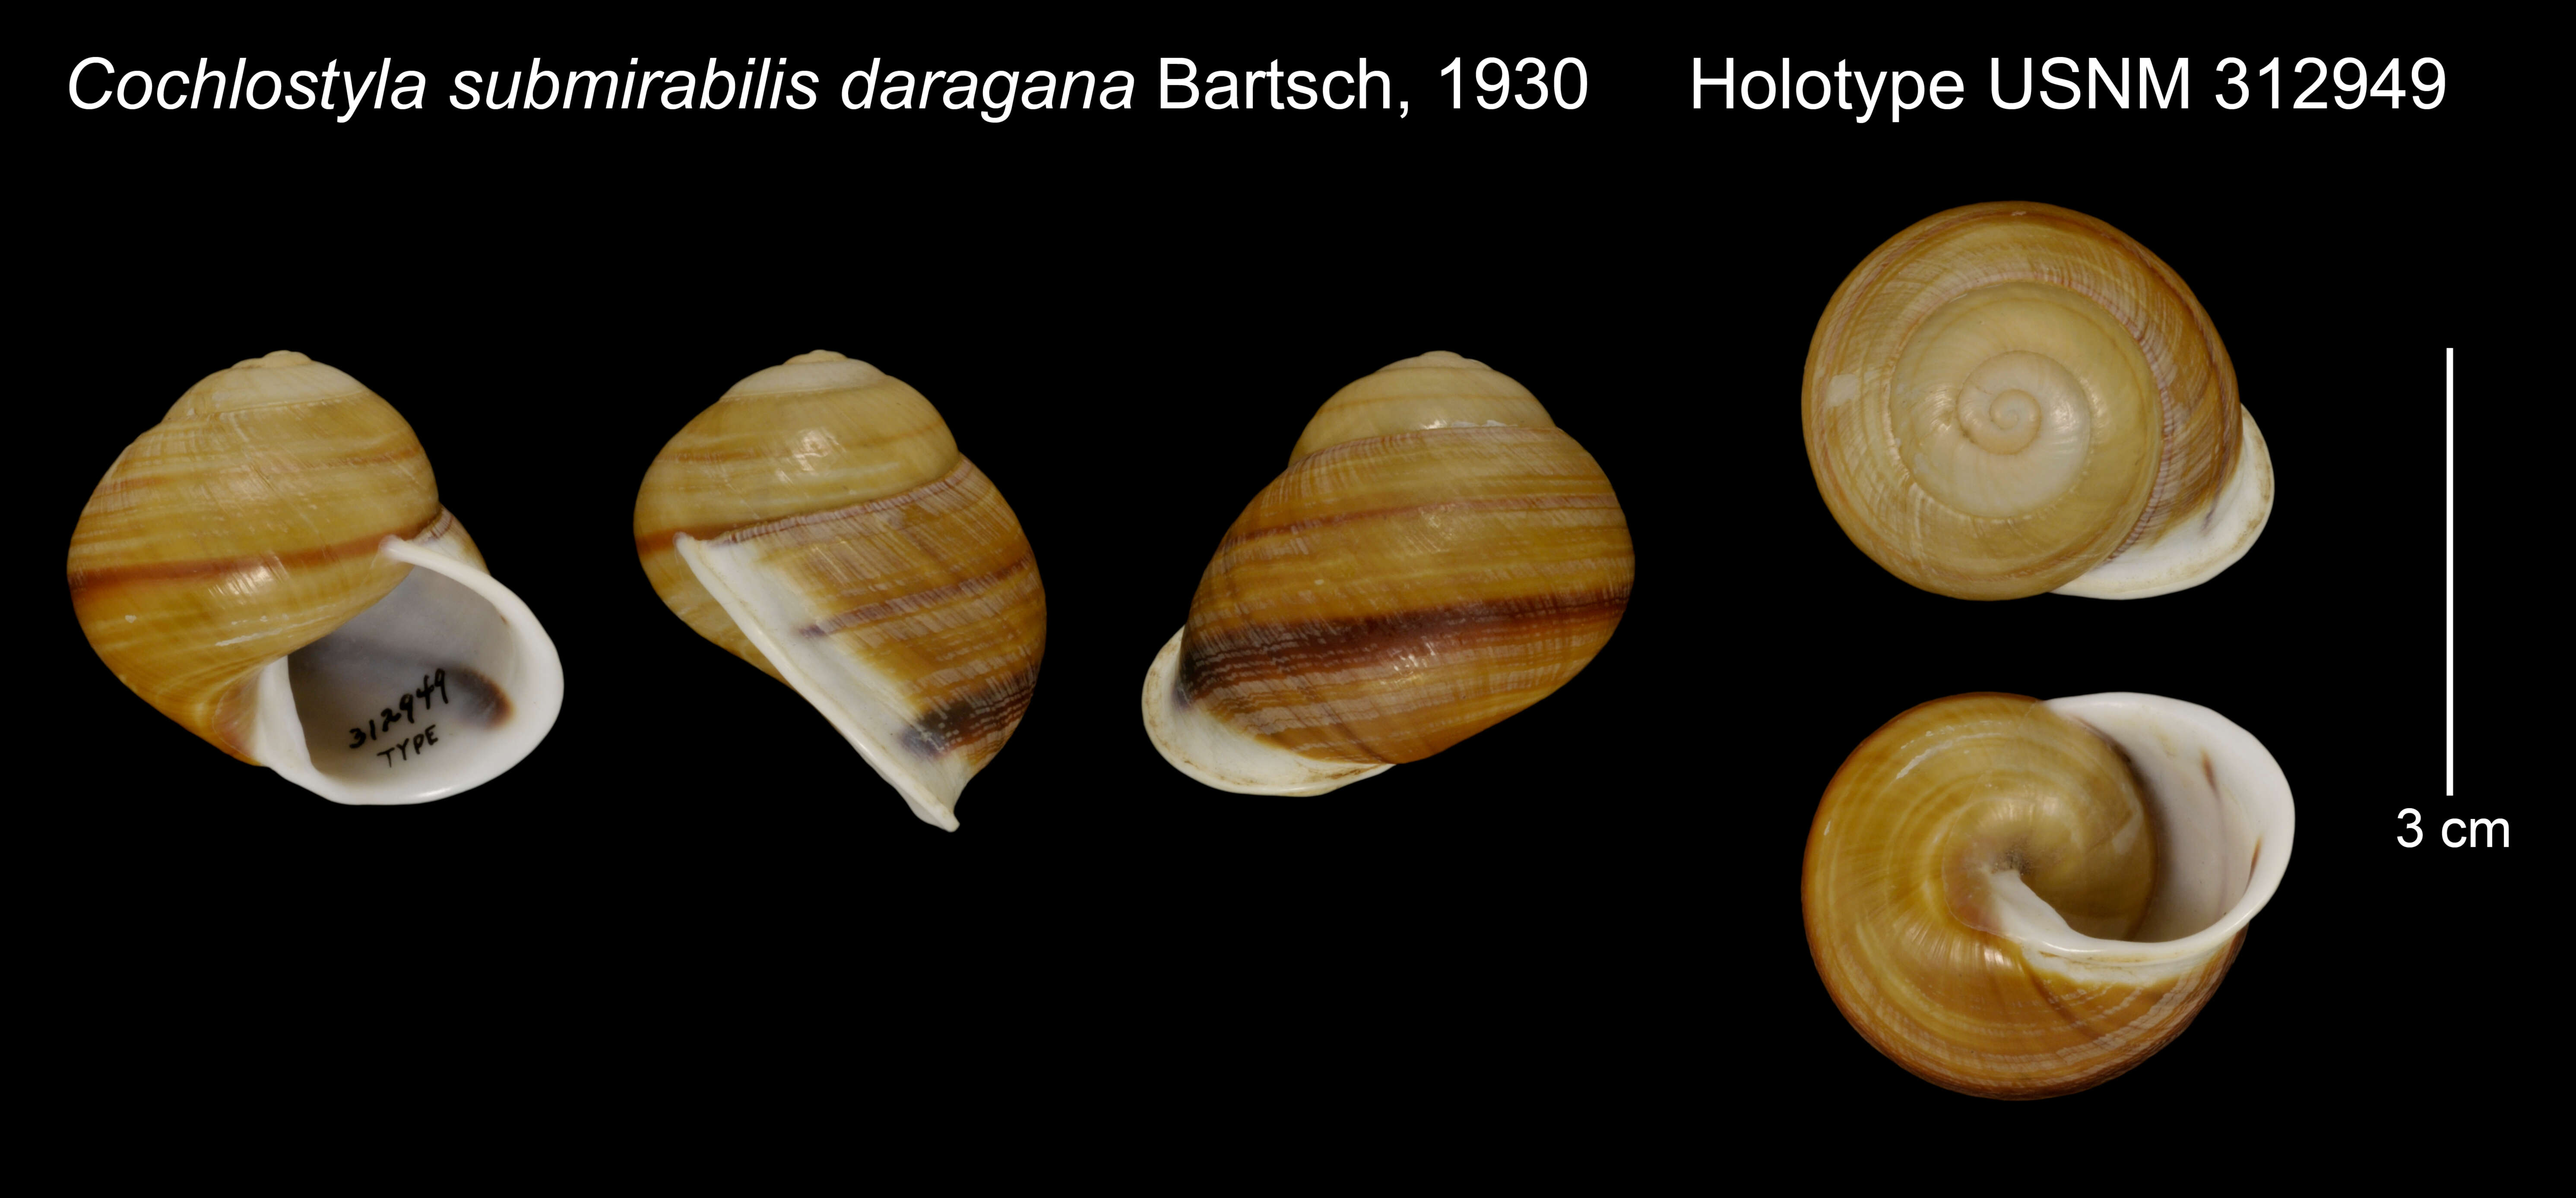 Image of Cochlostyla submirabilis daragana Bartsch